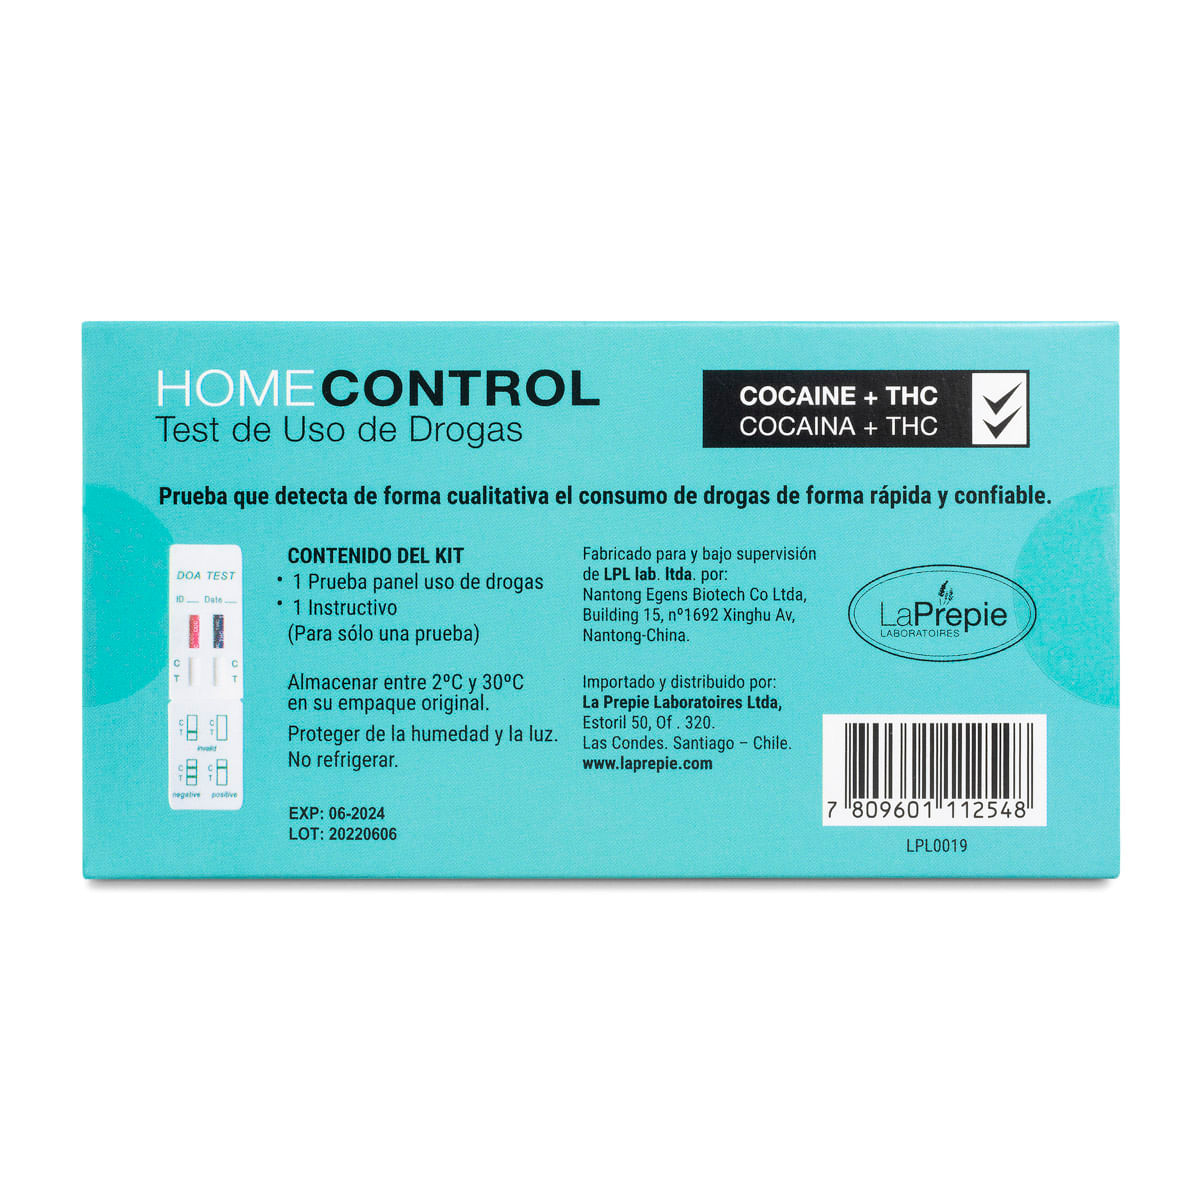 Home Control Drug Test - Test De Drogas (Cocaina Thc) 1 Pieza